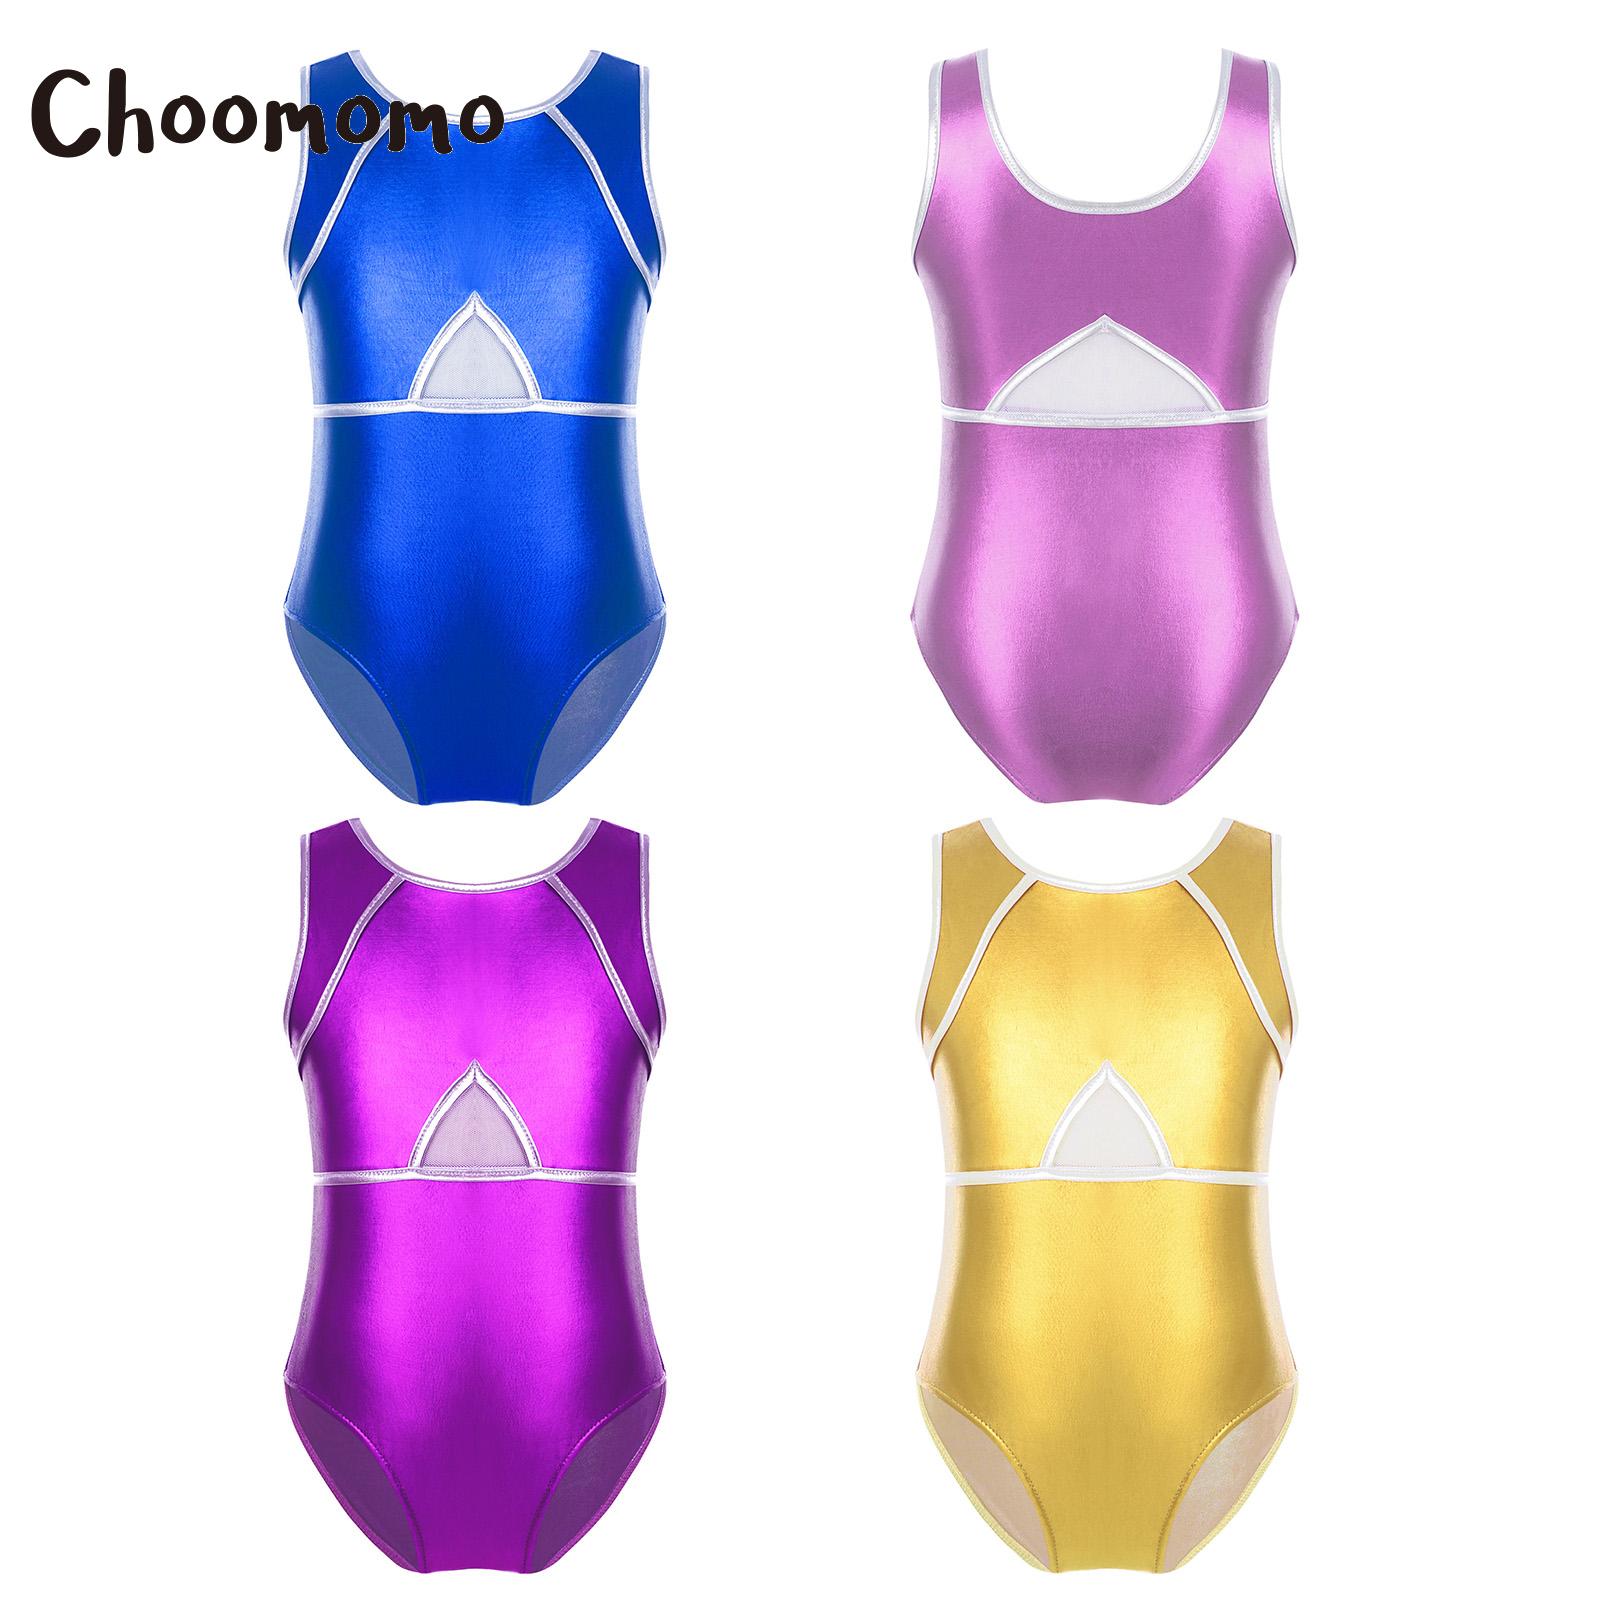 Choomomo Kids Girls Sleeveless Mesh Patchwork Shiny Solid Metallic Fabric Swimming Bodysuits or Gymnastic Yoga Dance Jumpsuits